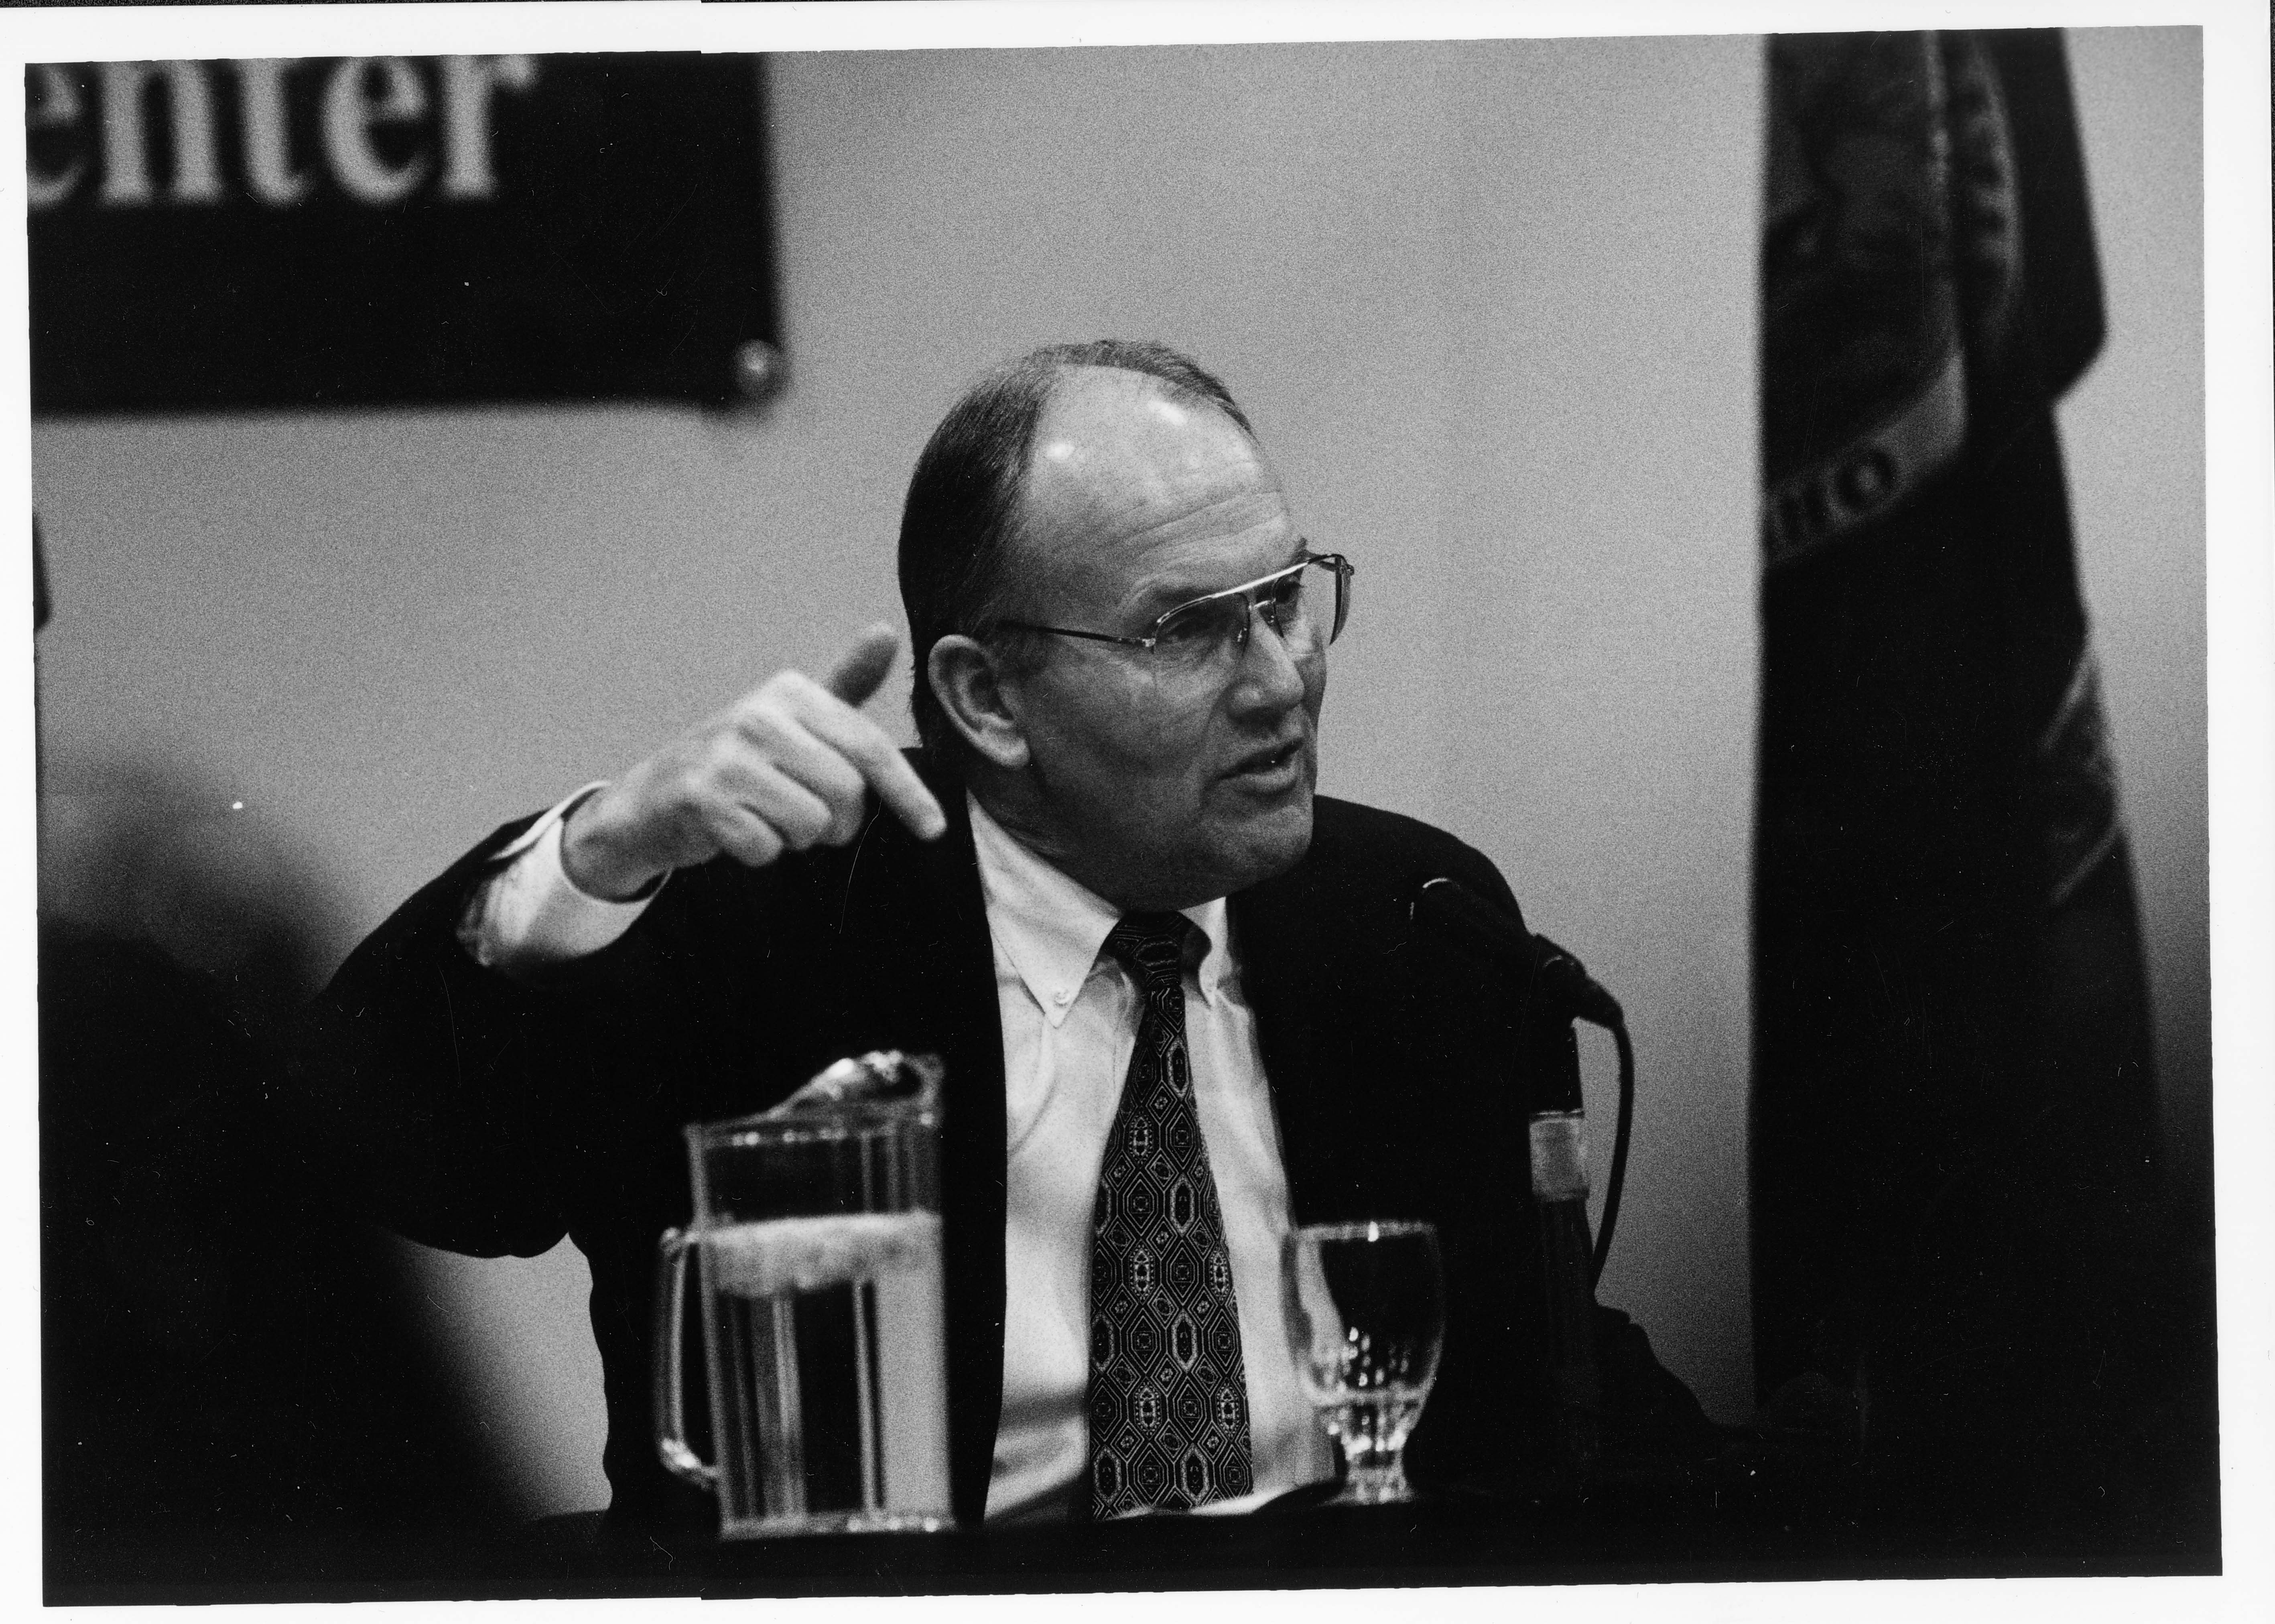 Senator Larry Craig